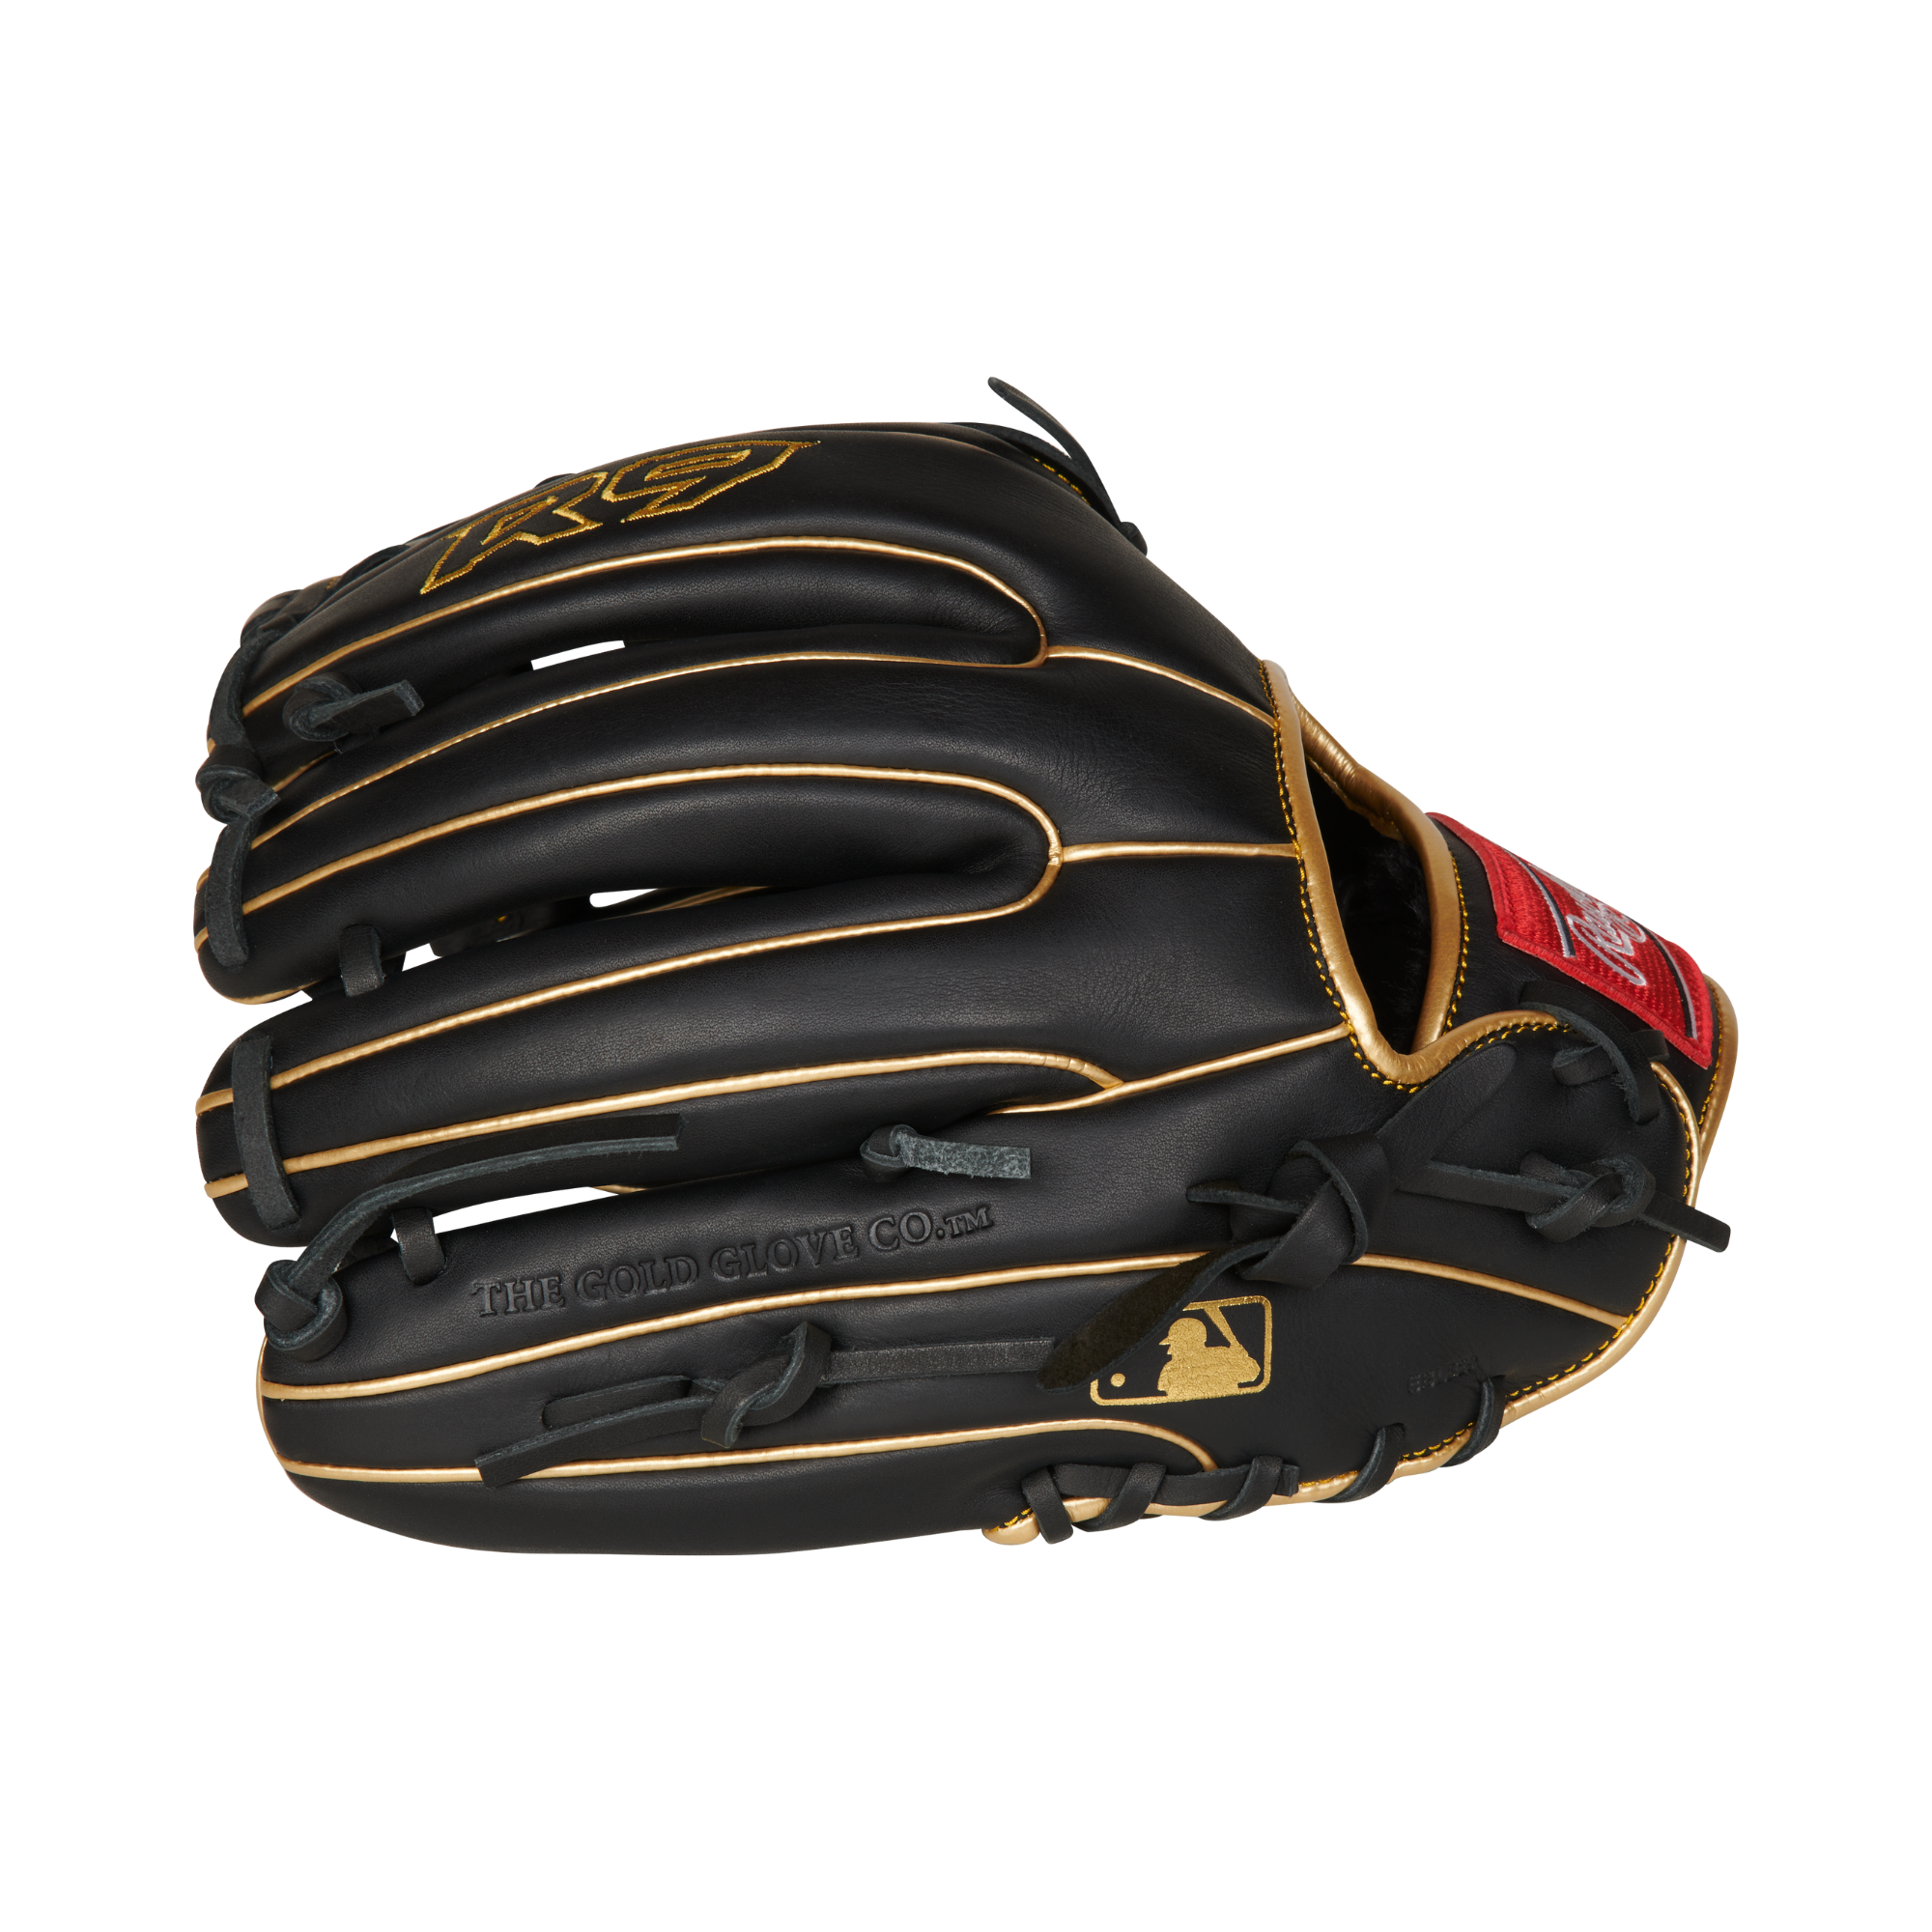 Rawlings R9 Series Infield Baseball Glove 11.75" RHT